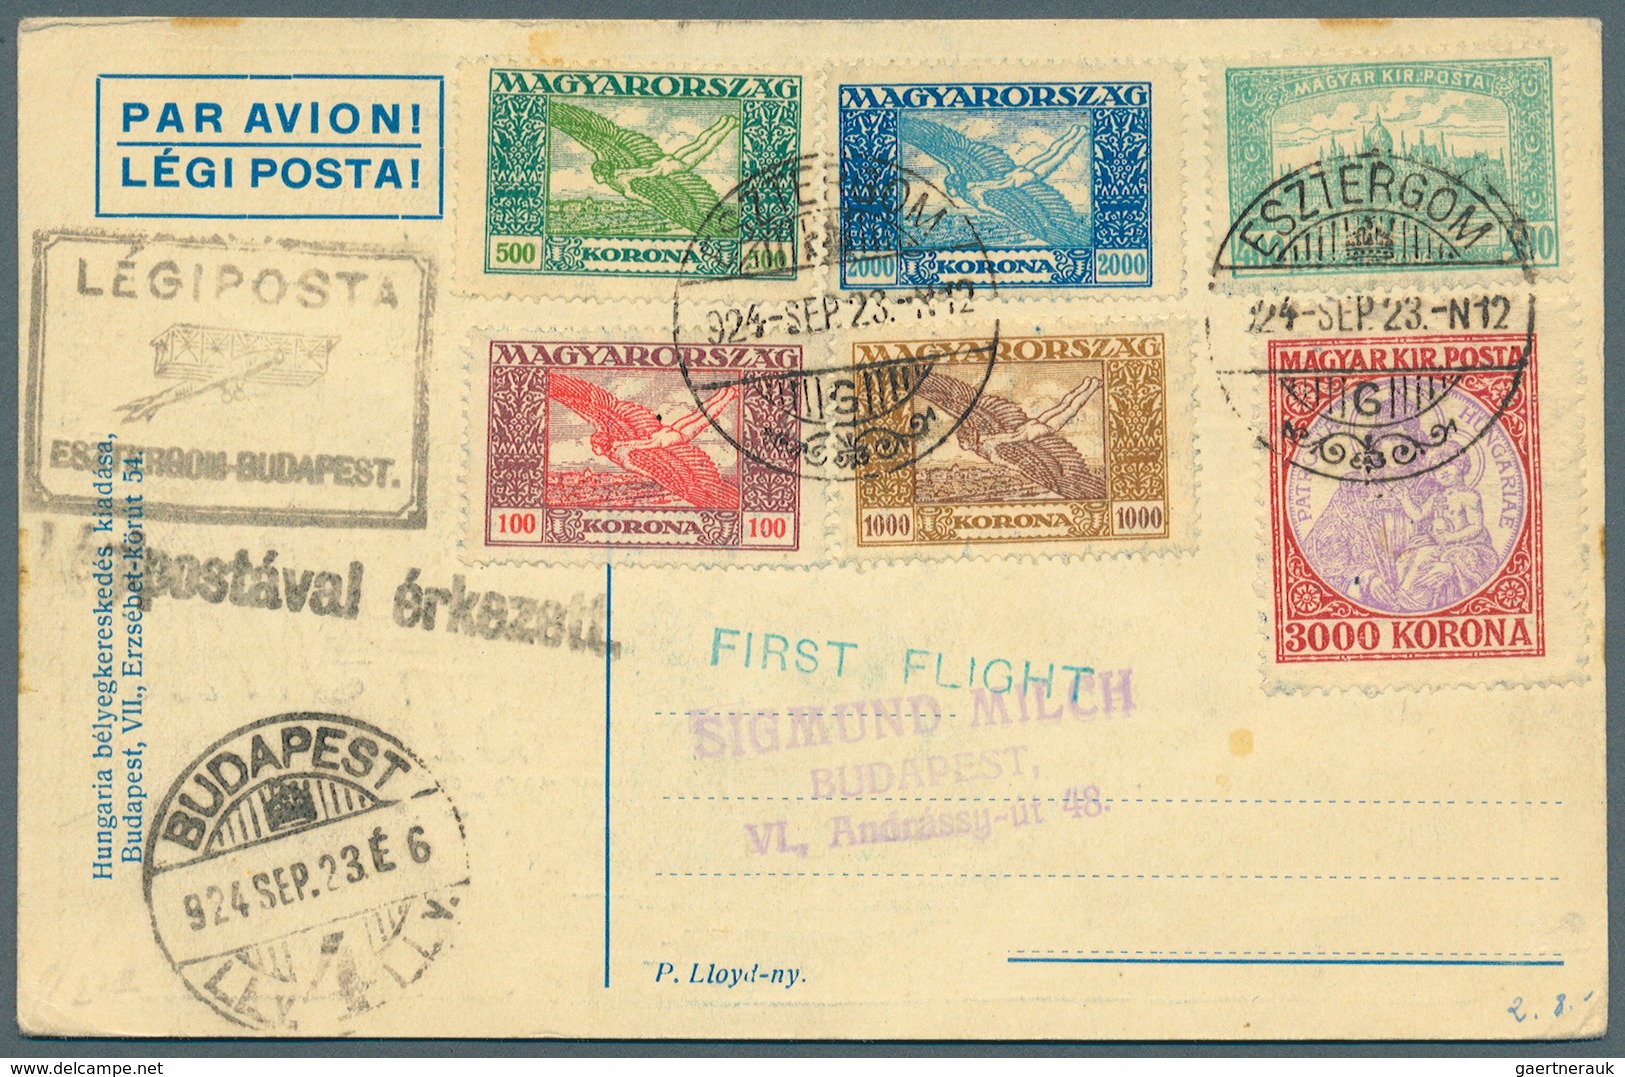 24822 Flugpost Übersee: Ab 1923: 79 frühe Flugbelege, einige nach Afrika, viele dekorative Erstflugbelege,